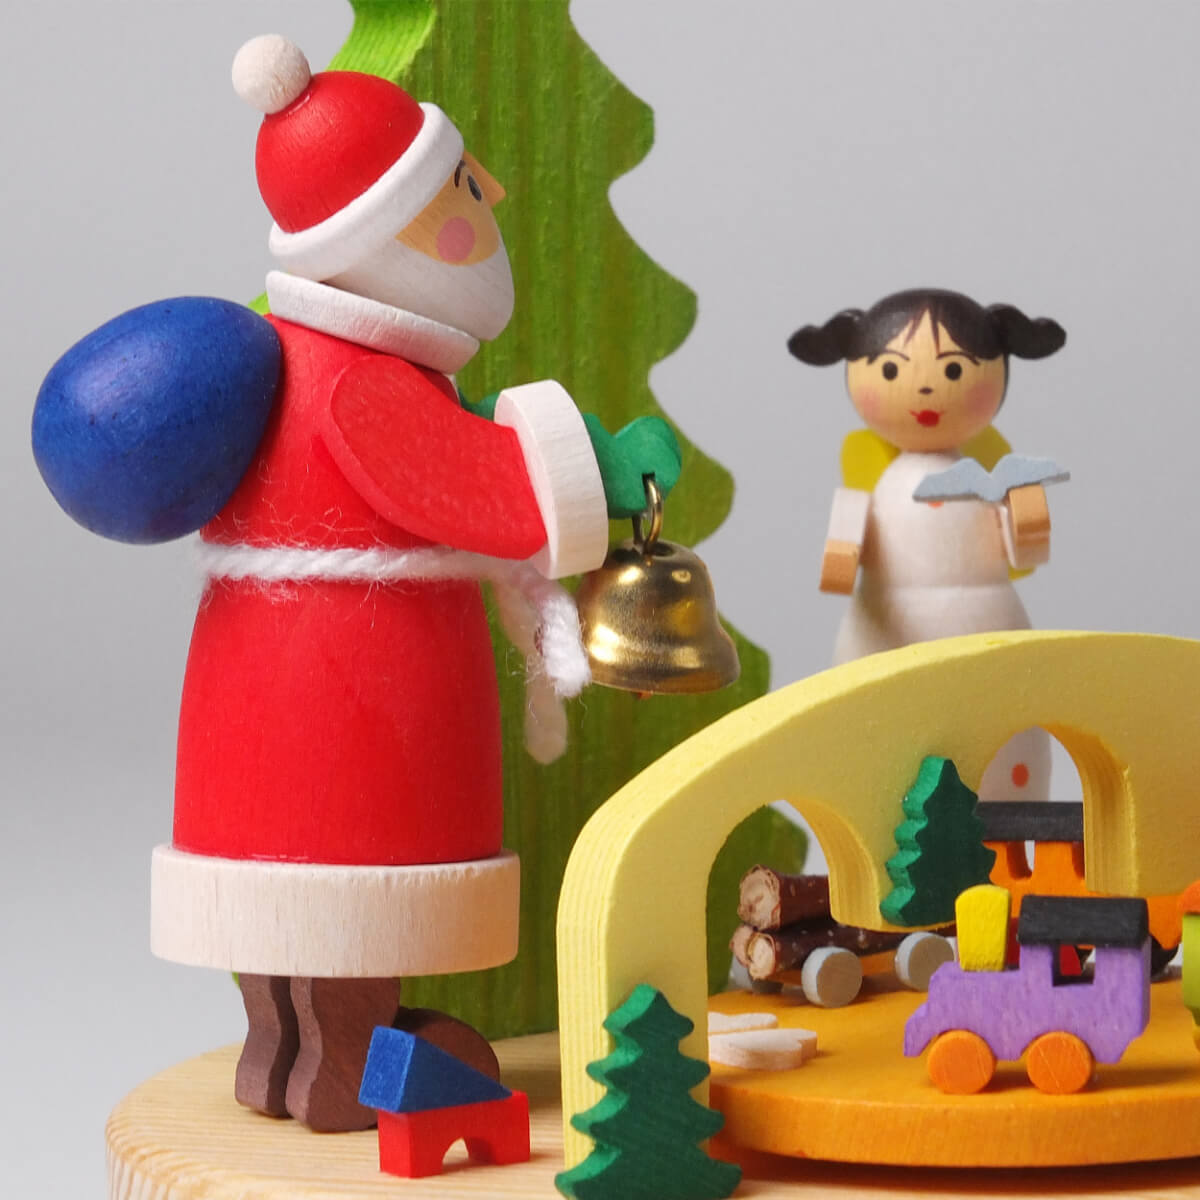 Music Box 'Santa Claus with Christ child'